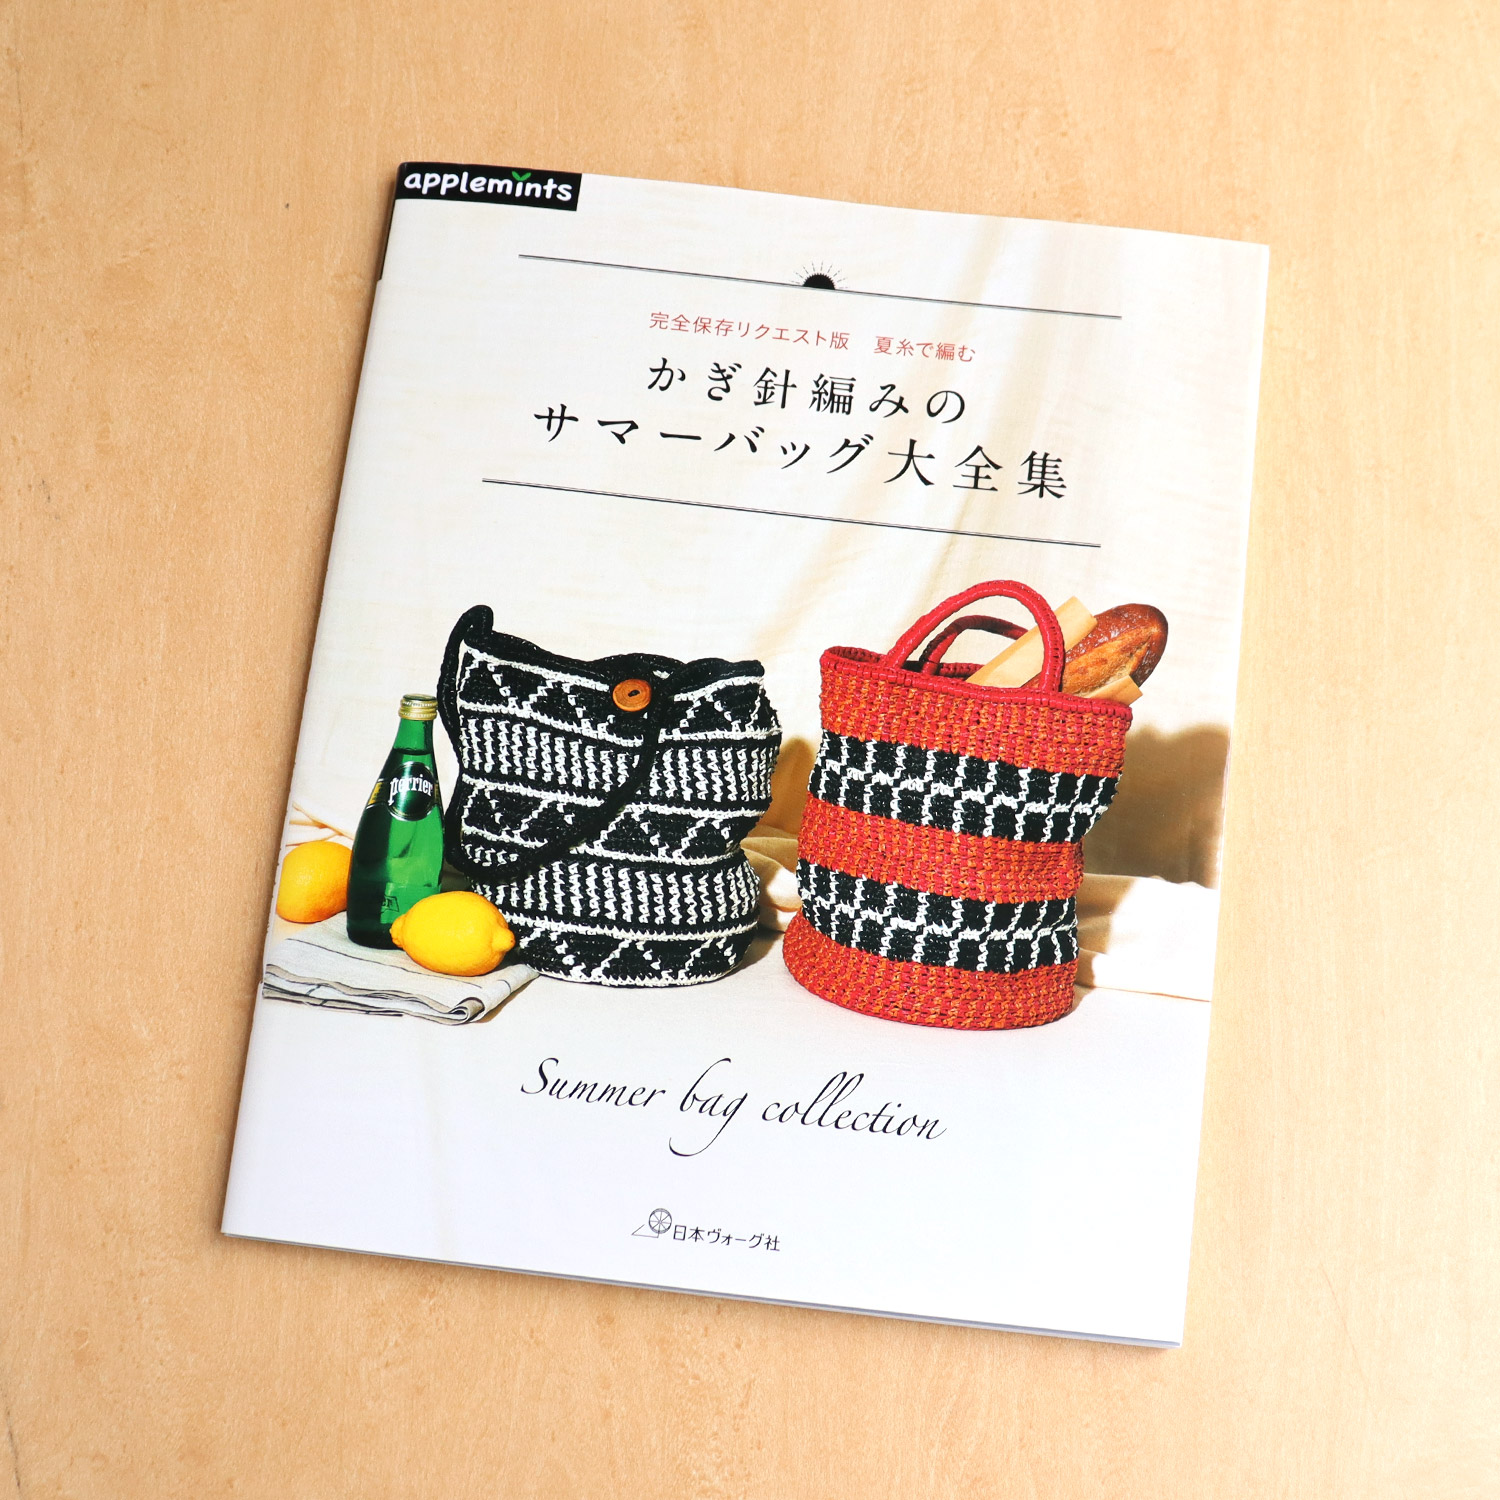 NV72183 Crochet summer bags in summer yarns: a compilation of crochet summer bags(book)